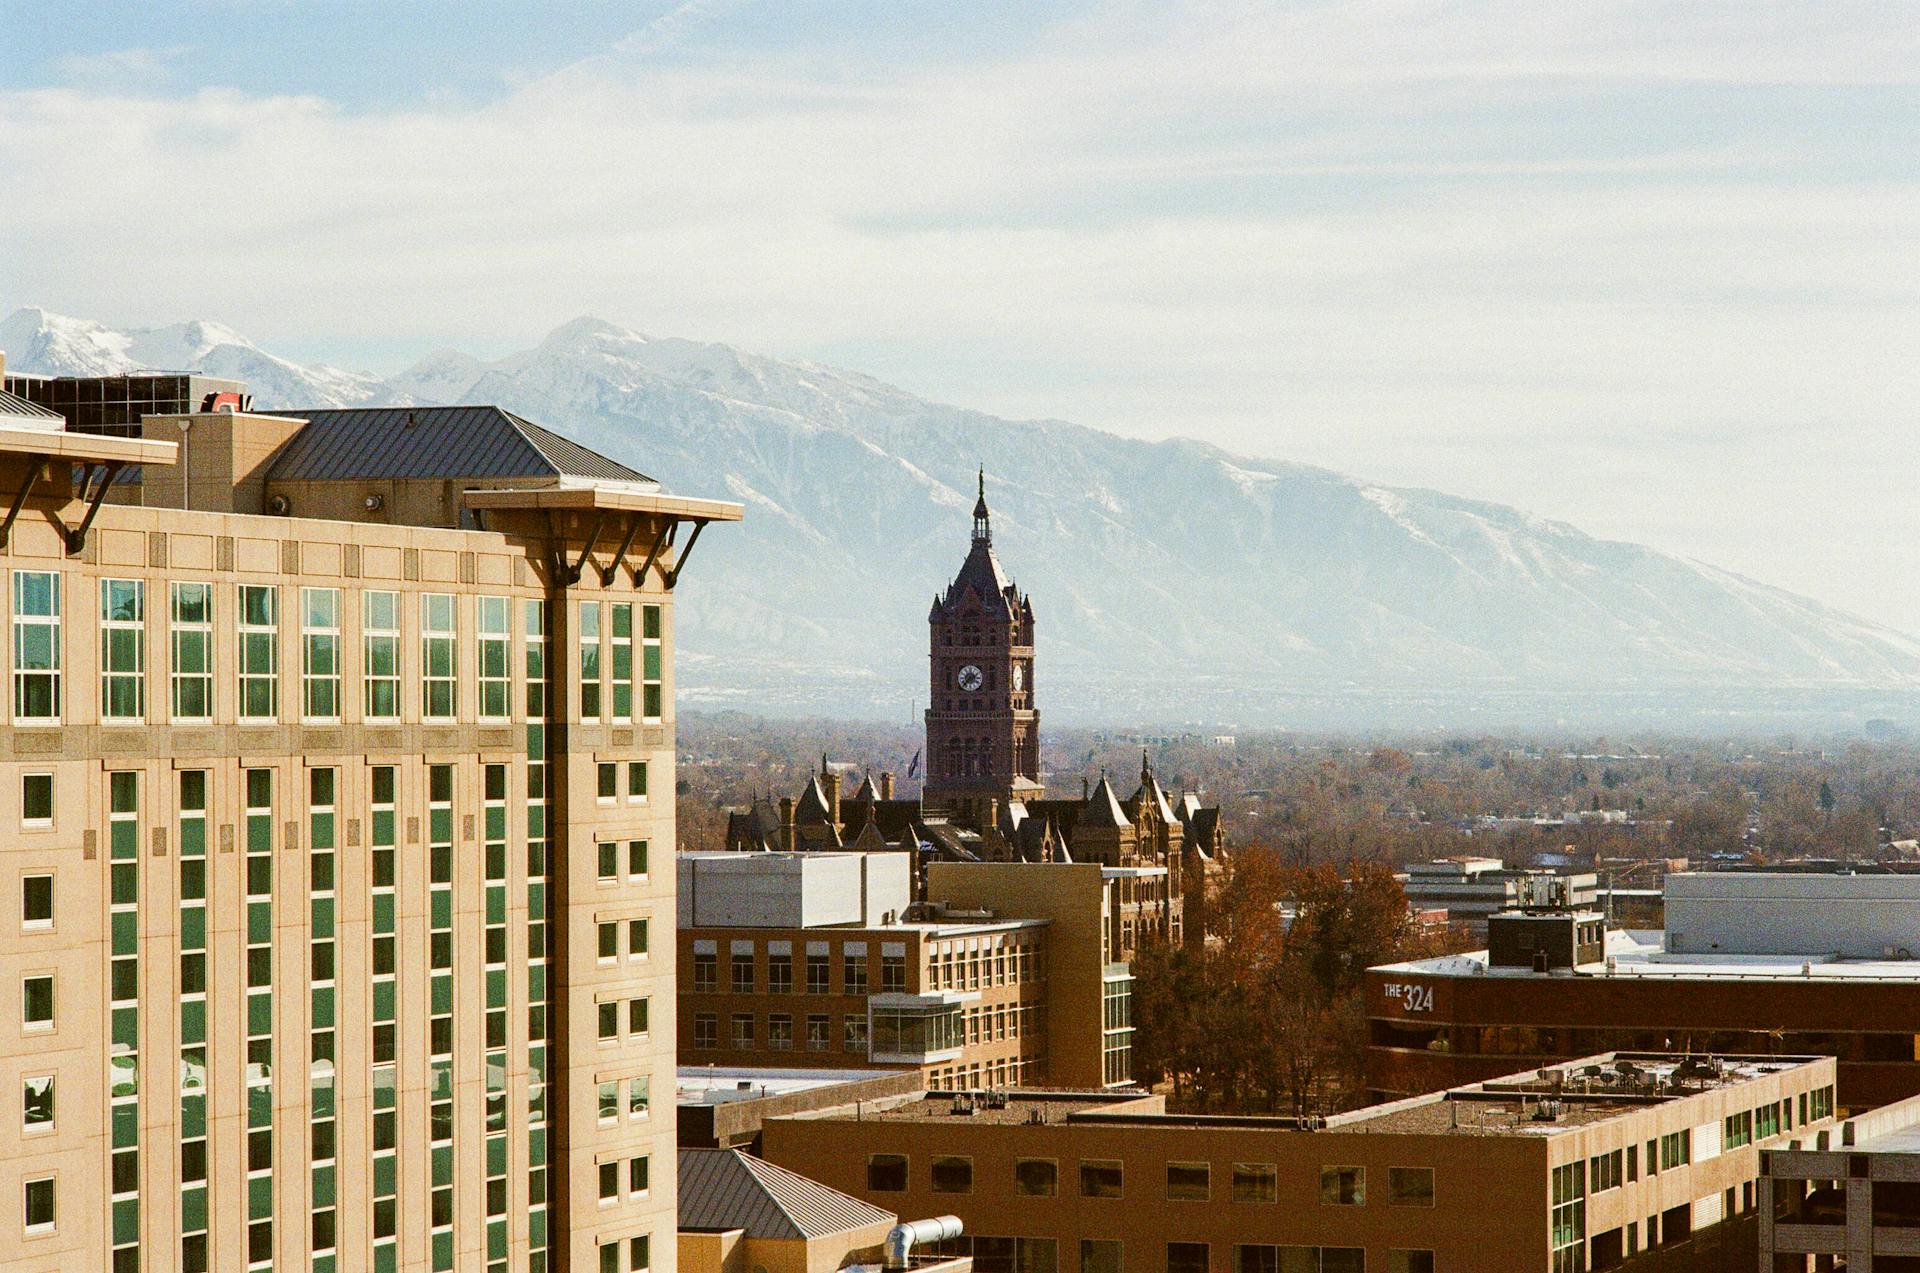 Landscape image of Salt Lake City buildings against mountains